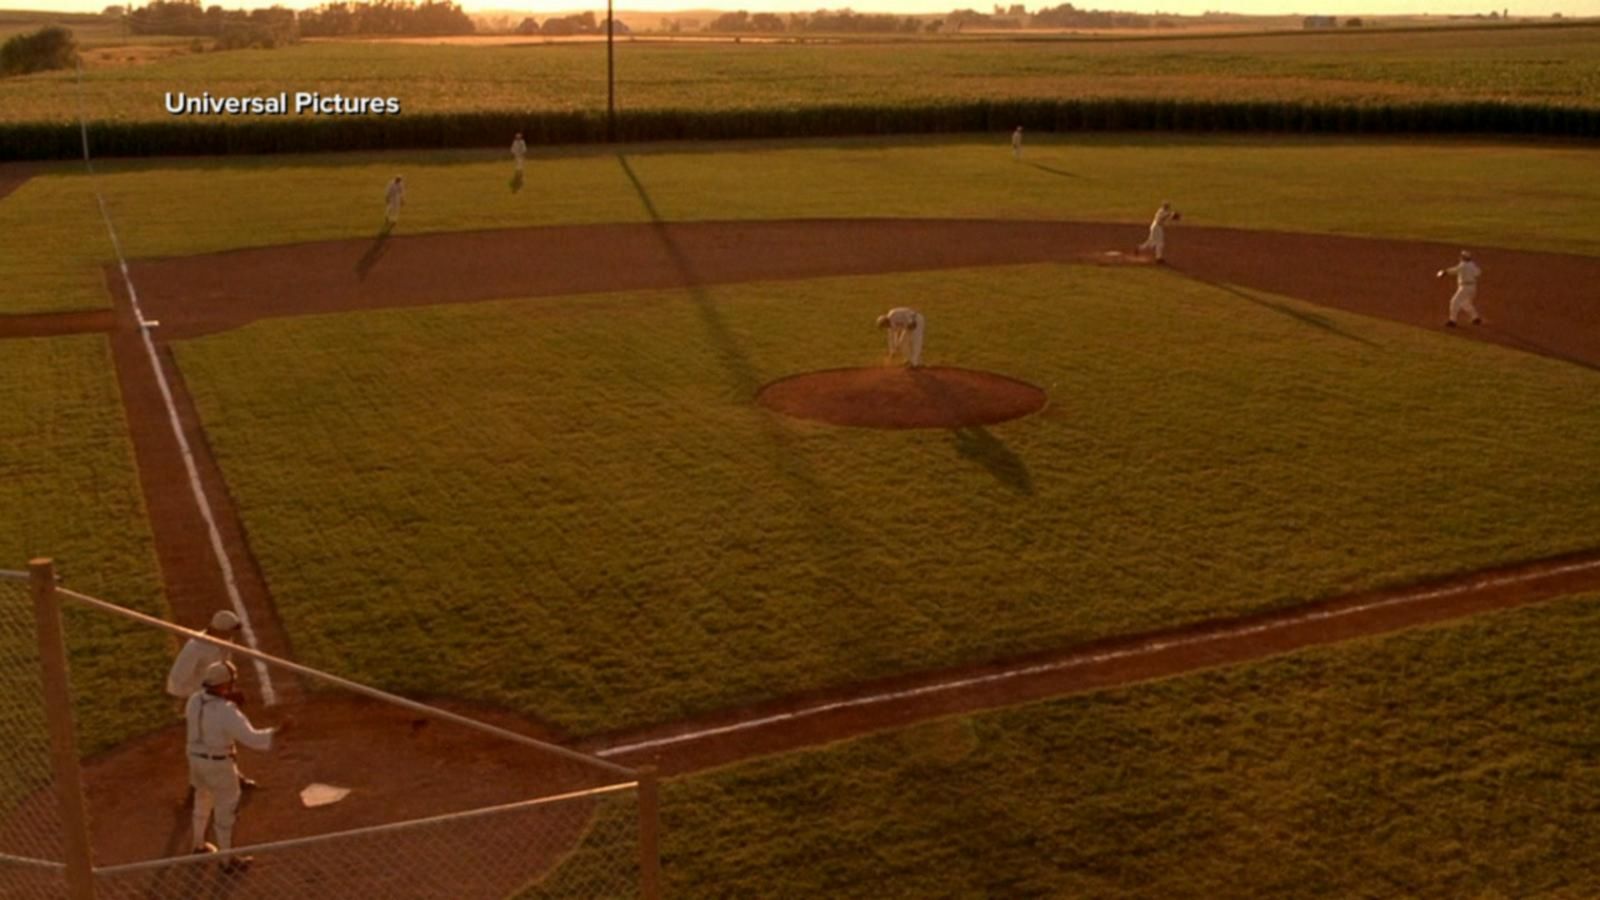 Field of Dreams' Iowa site gets White Sox, Yankees game next season